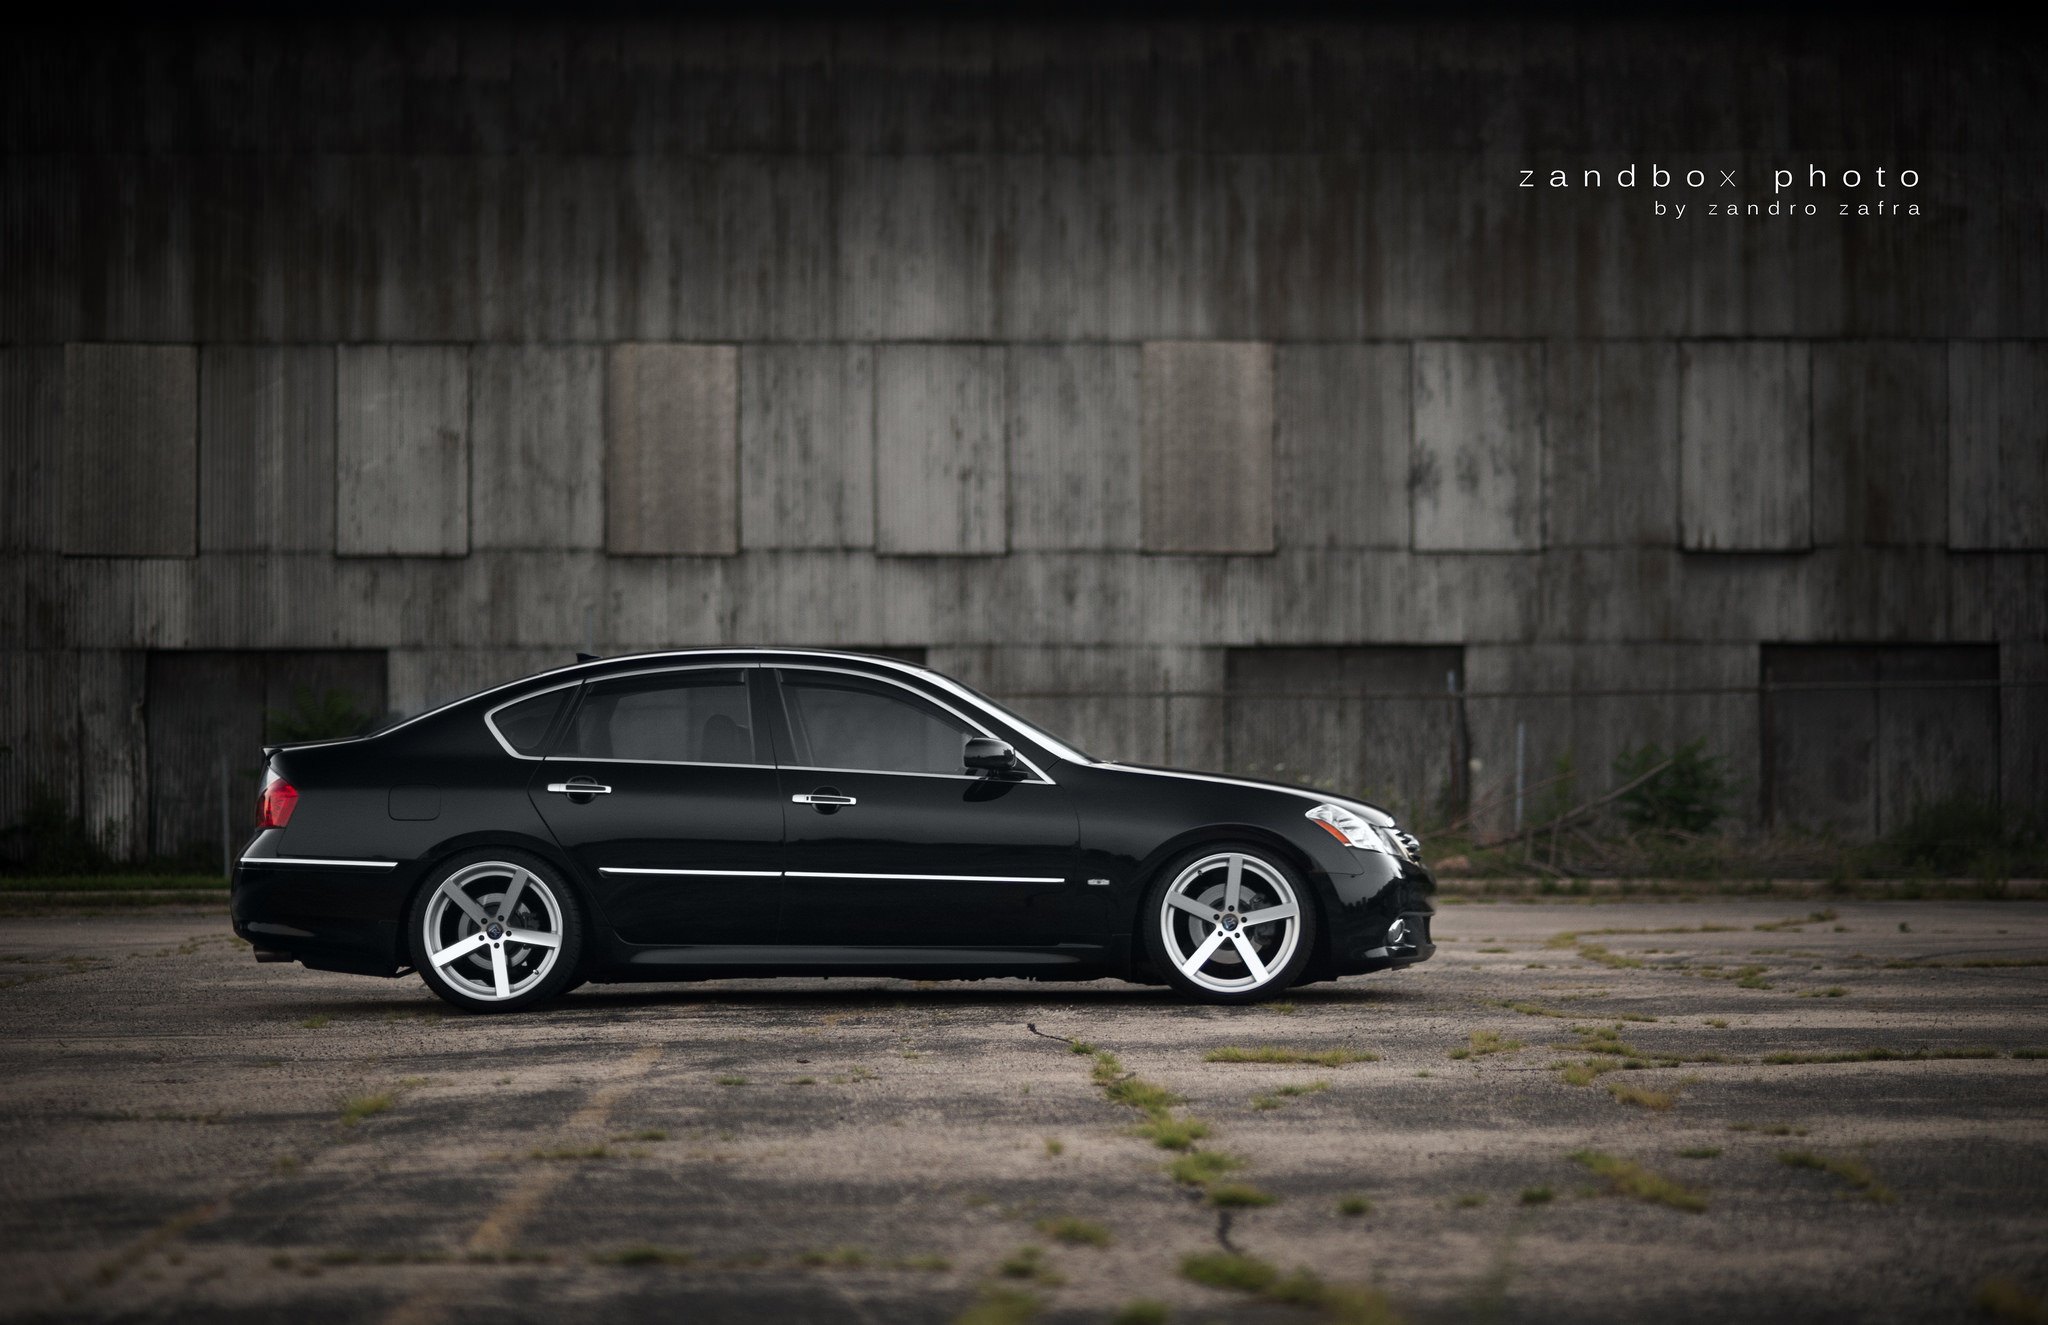 Black Infiniti M35 with Custom Chrome Wheels - Photo by zandbox